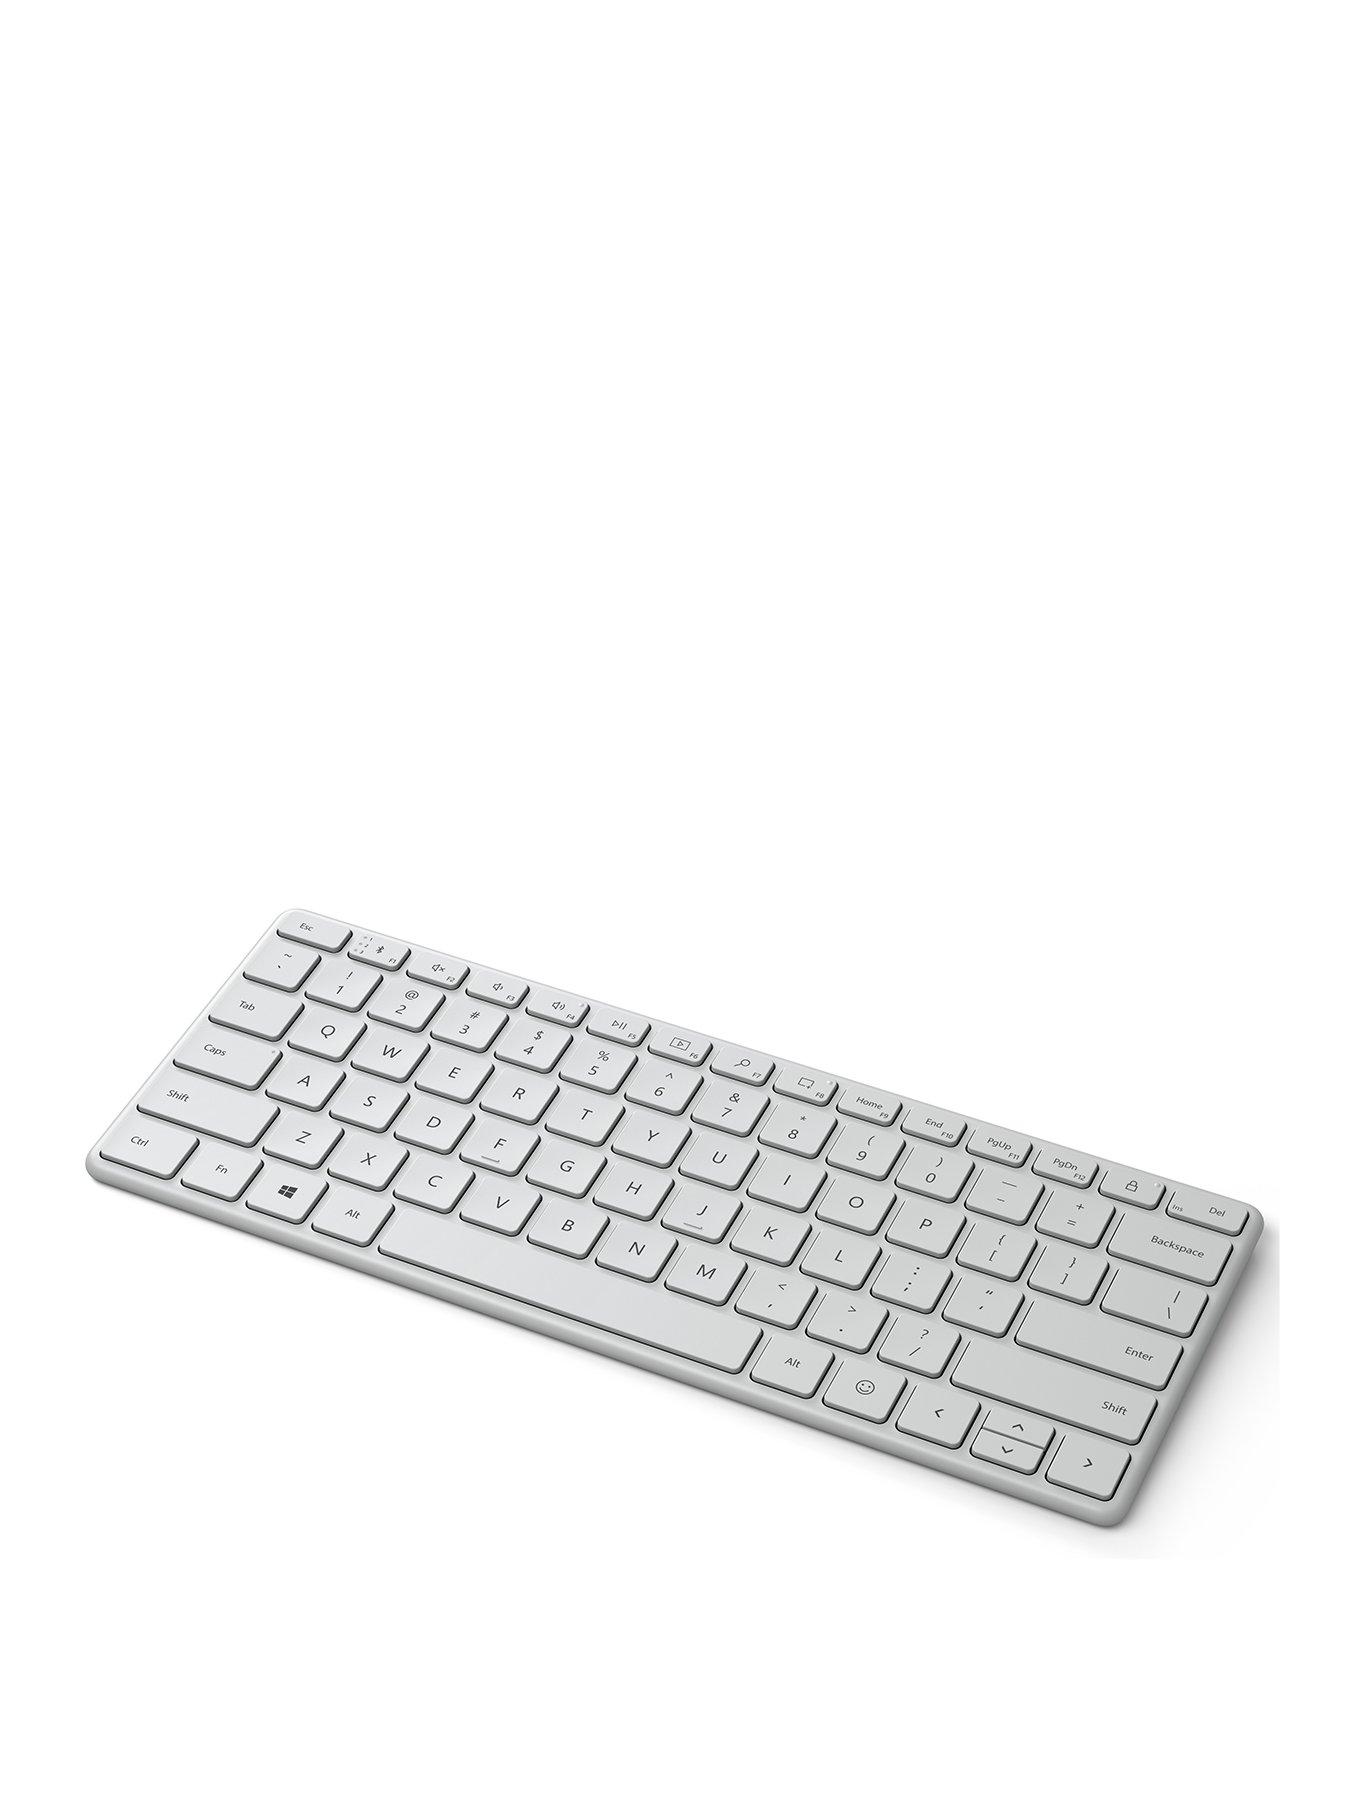 Microsoft Designer compact keyboard | littlewoods.com